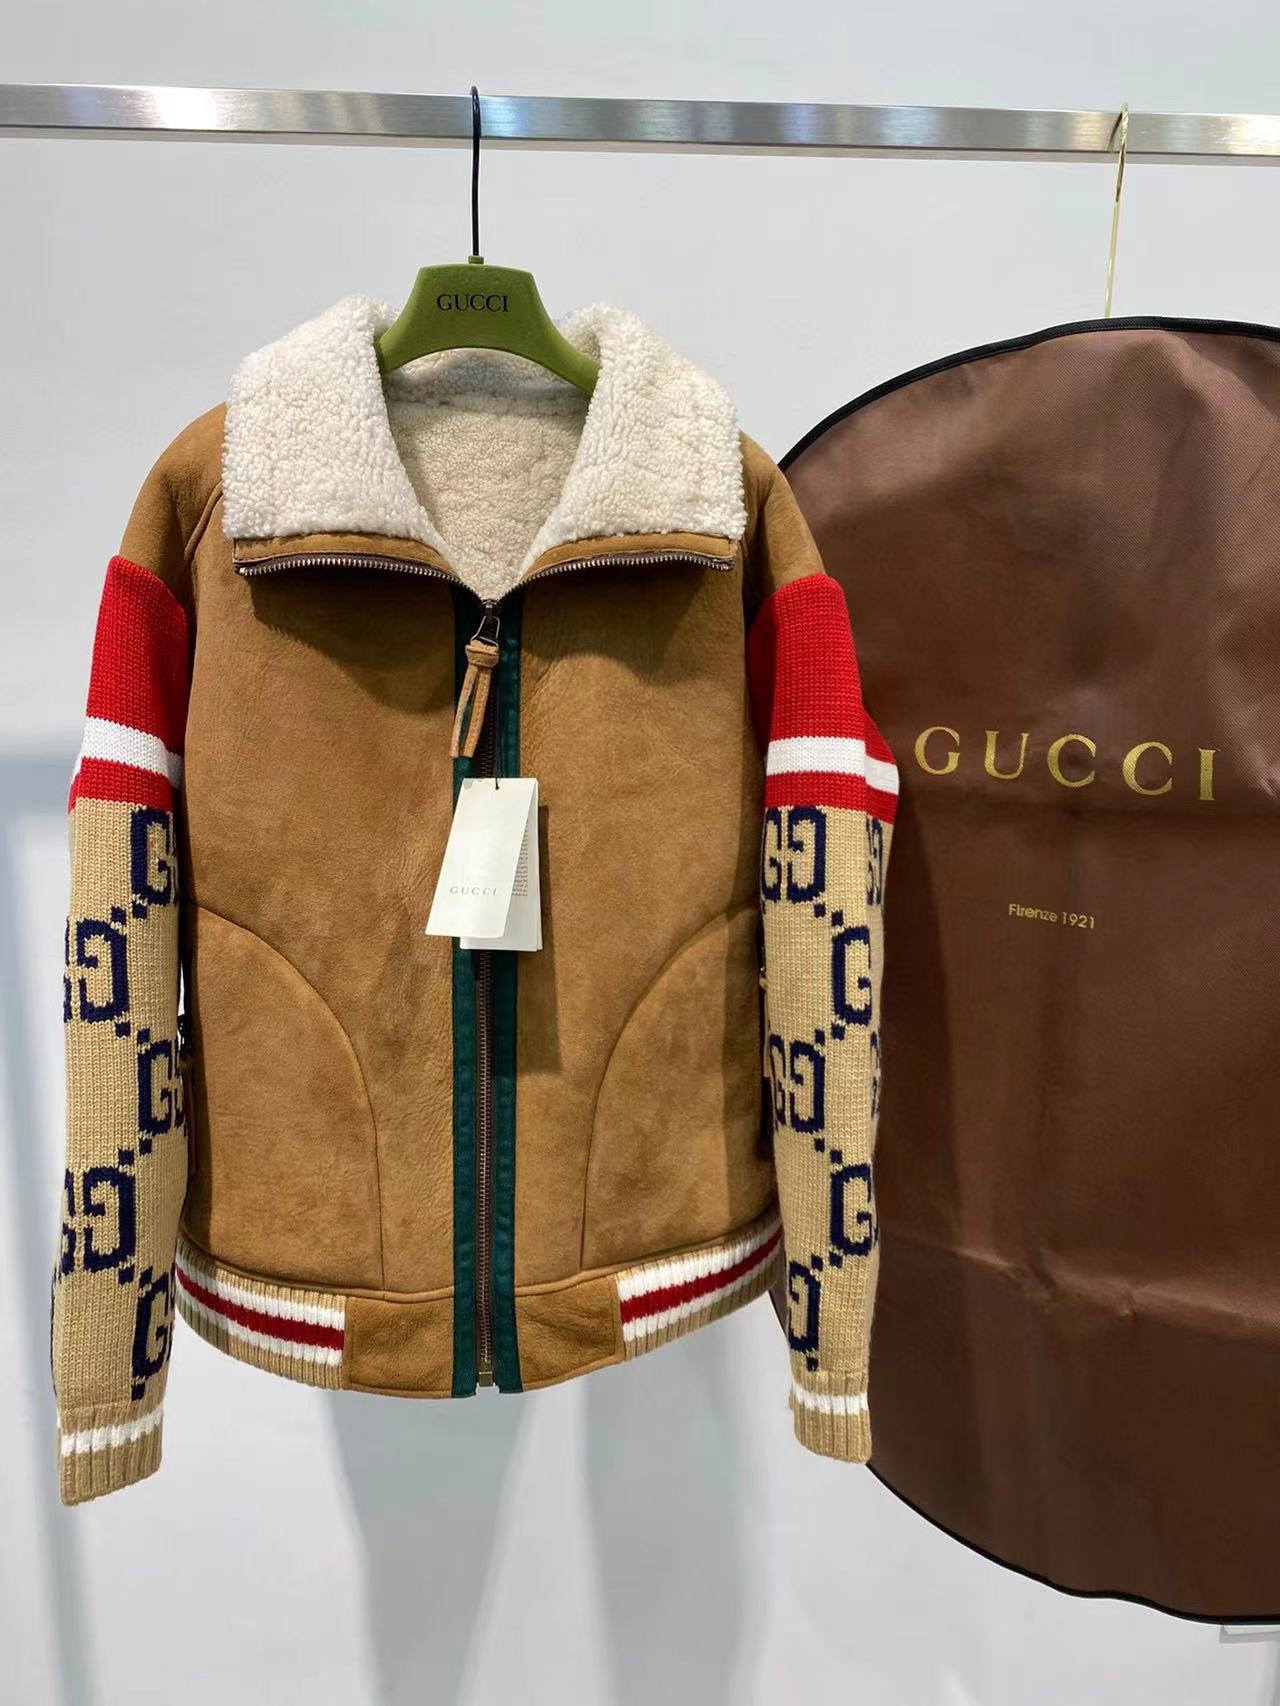 Gucci knit sleeve jacket